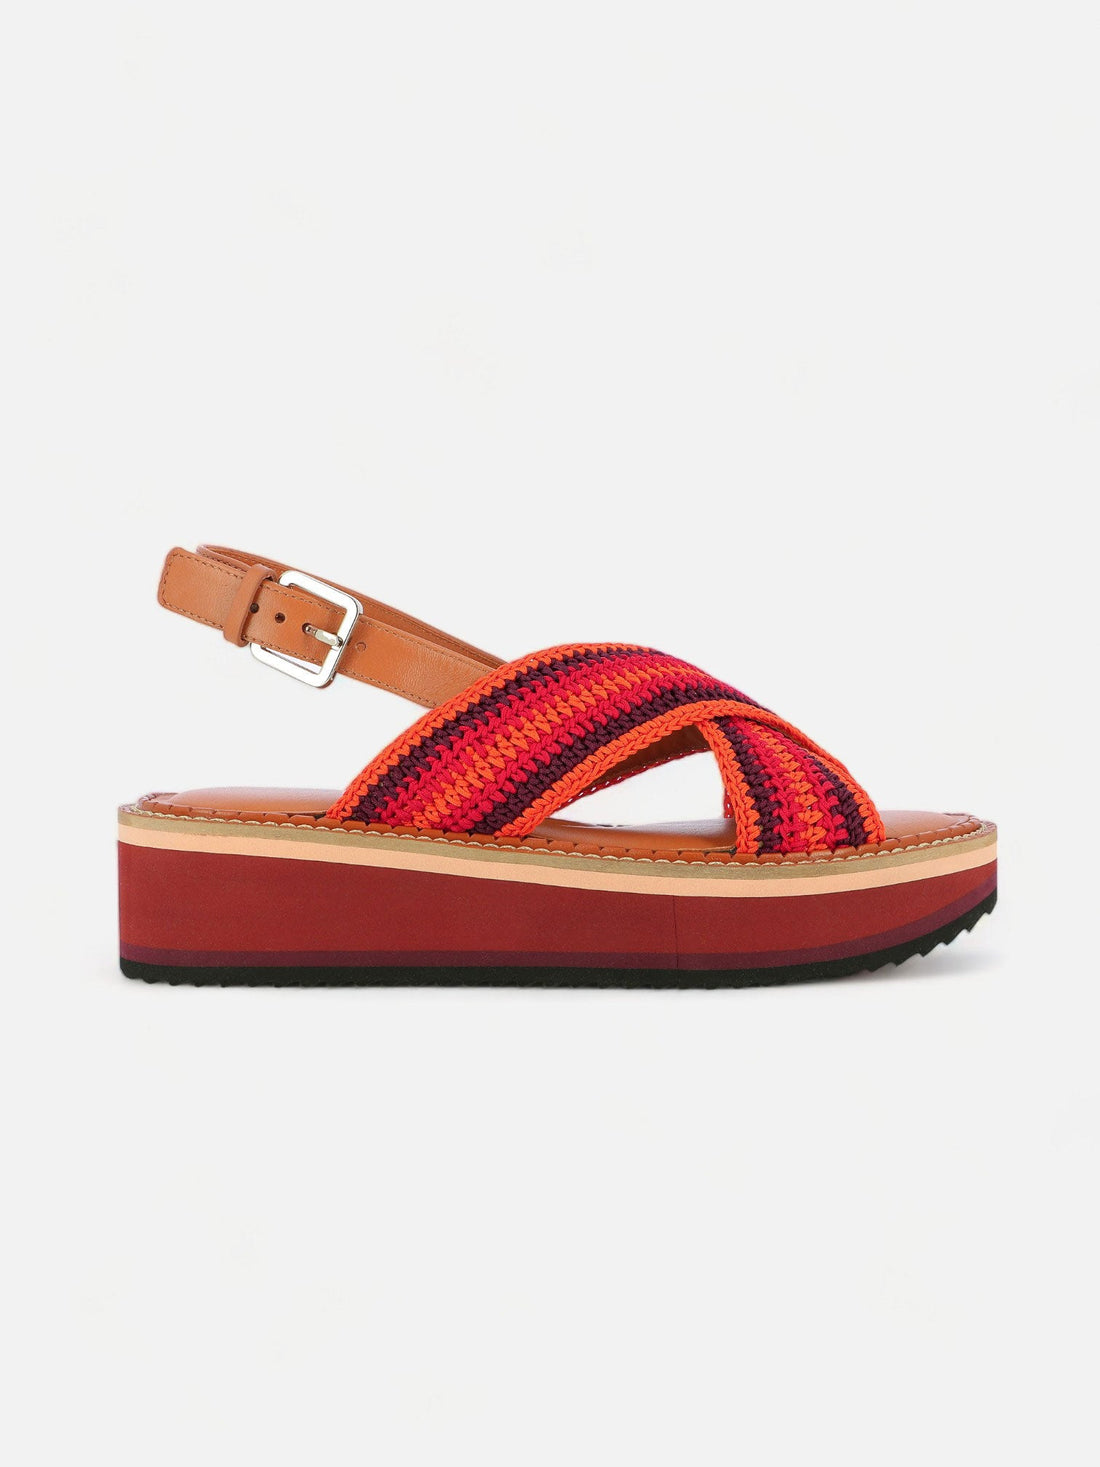 SANDALS - FADEN sandals, jaspe crochet - 3606063965866 - Clergerie Paris - Europe